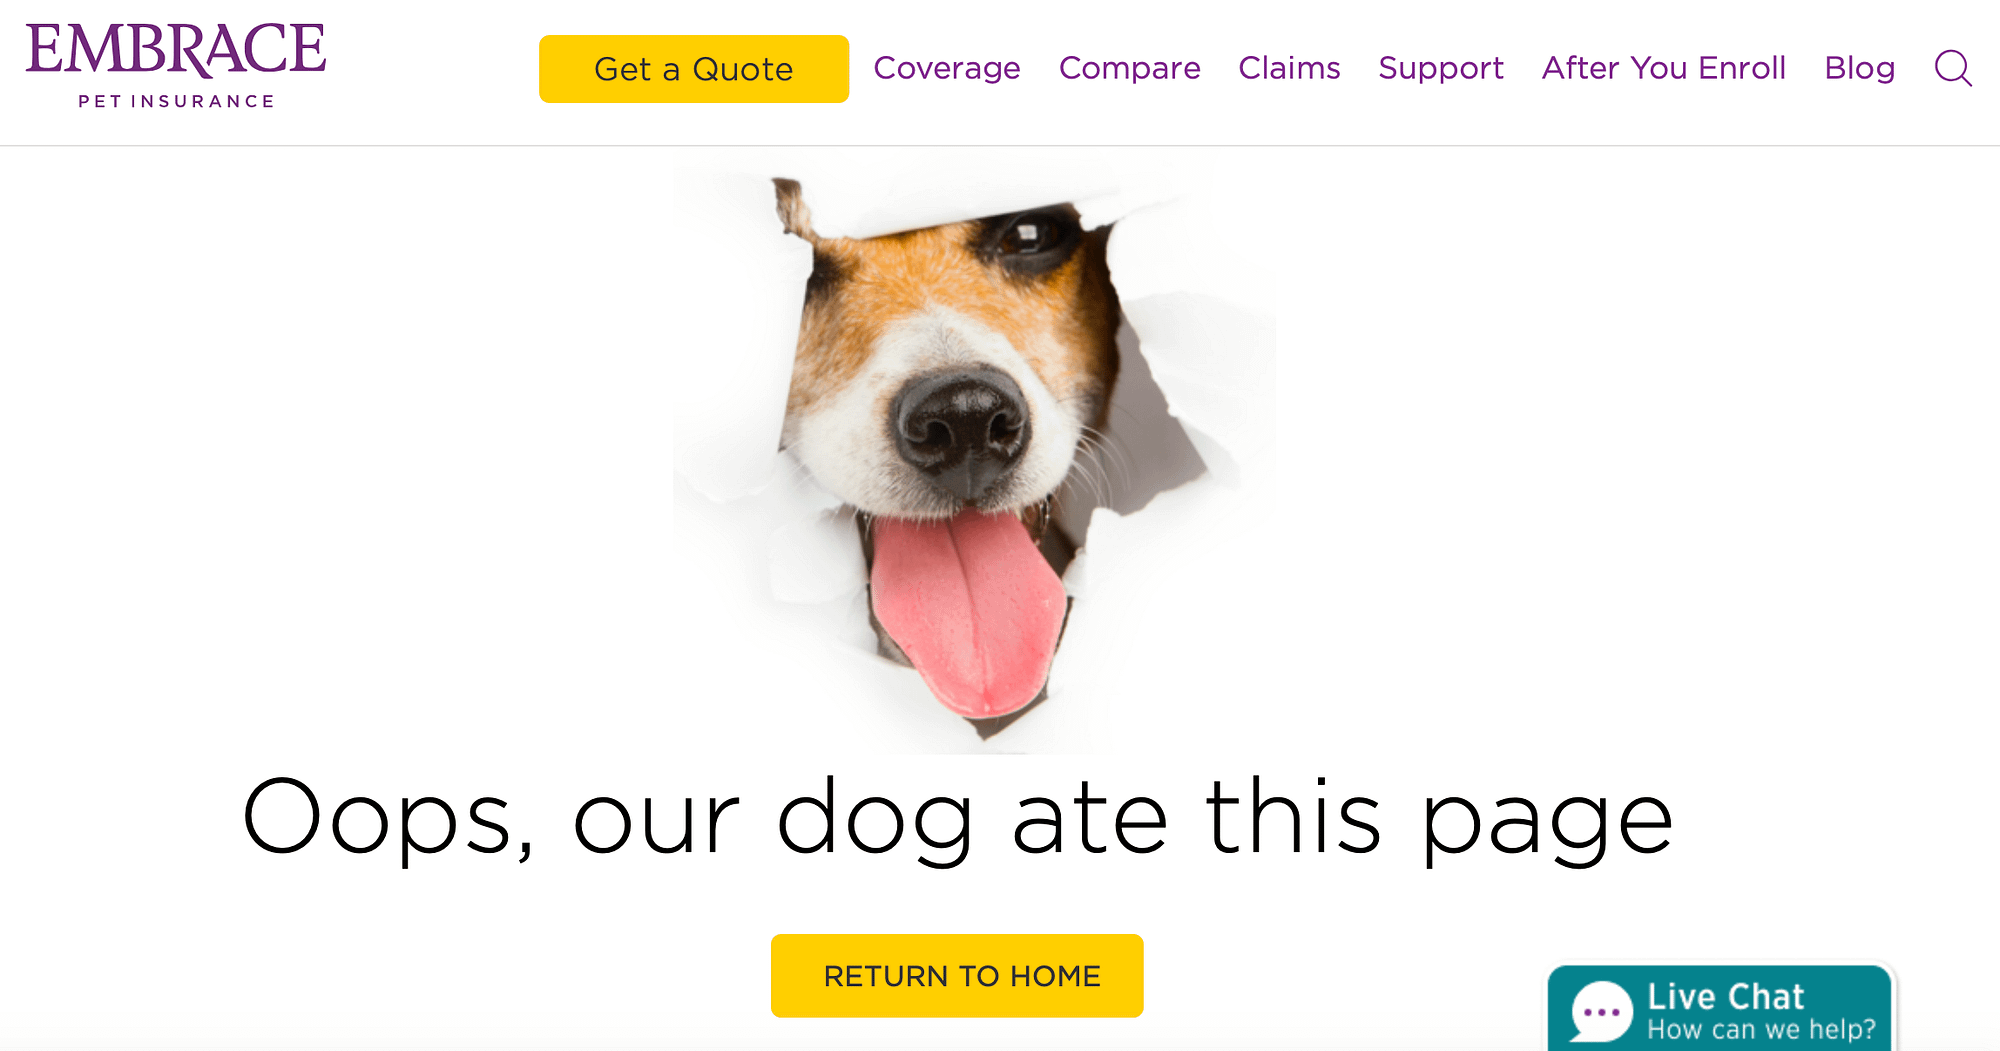 The Embrace Pet Insurance 404 error page.